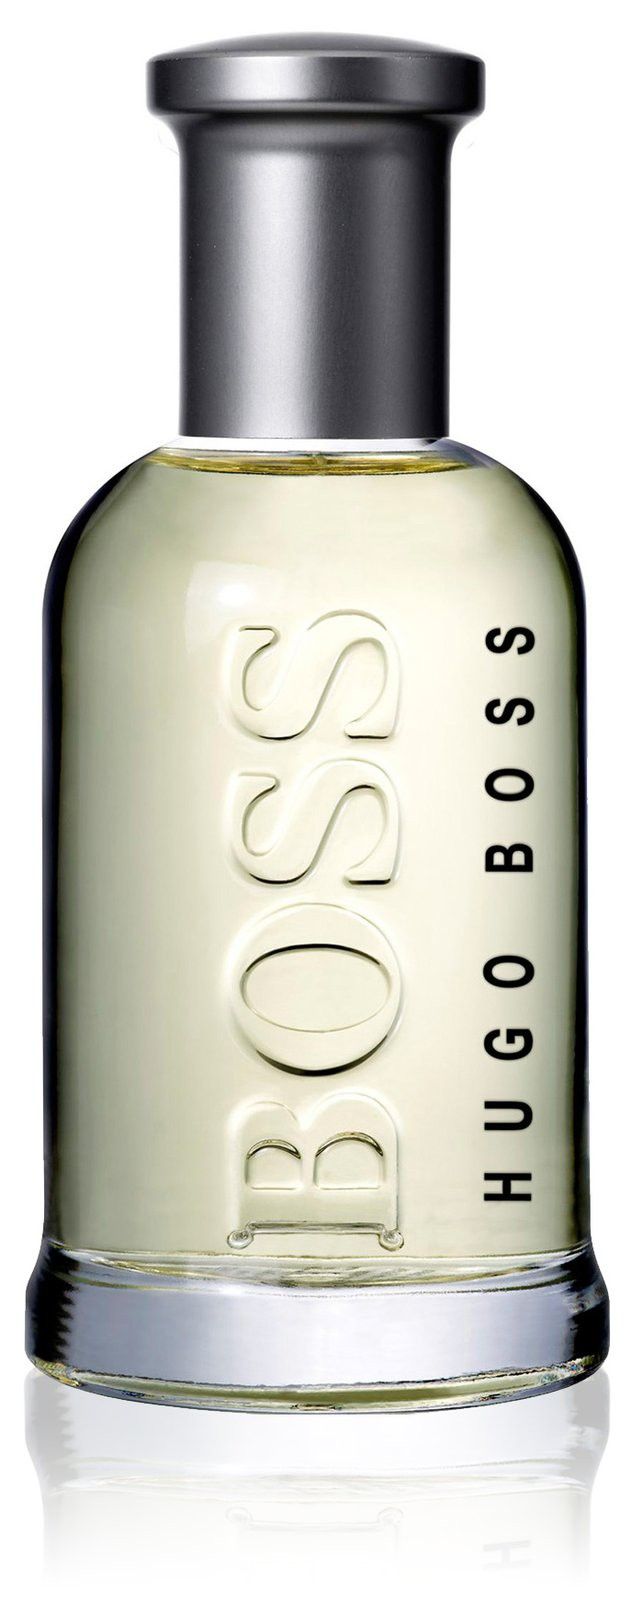 Hugo Boss Boss Bottled after shave lotion 100ml.